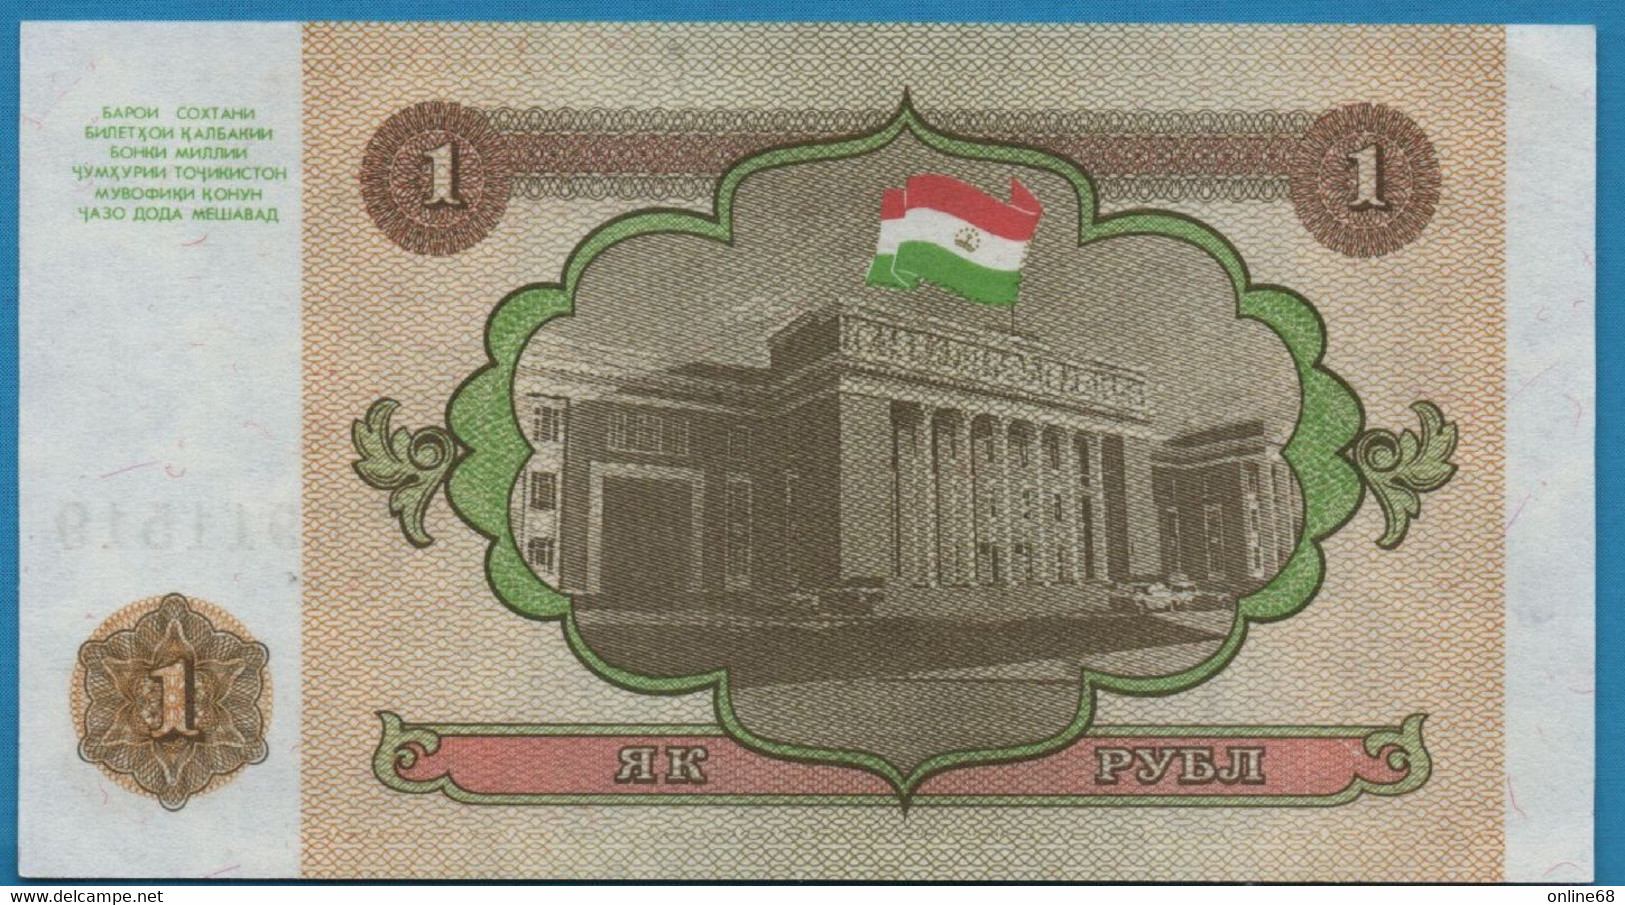 TAJIKISTAN 1 RUBL 1994 # AK 6911519 P# 1 - Tajikistan